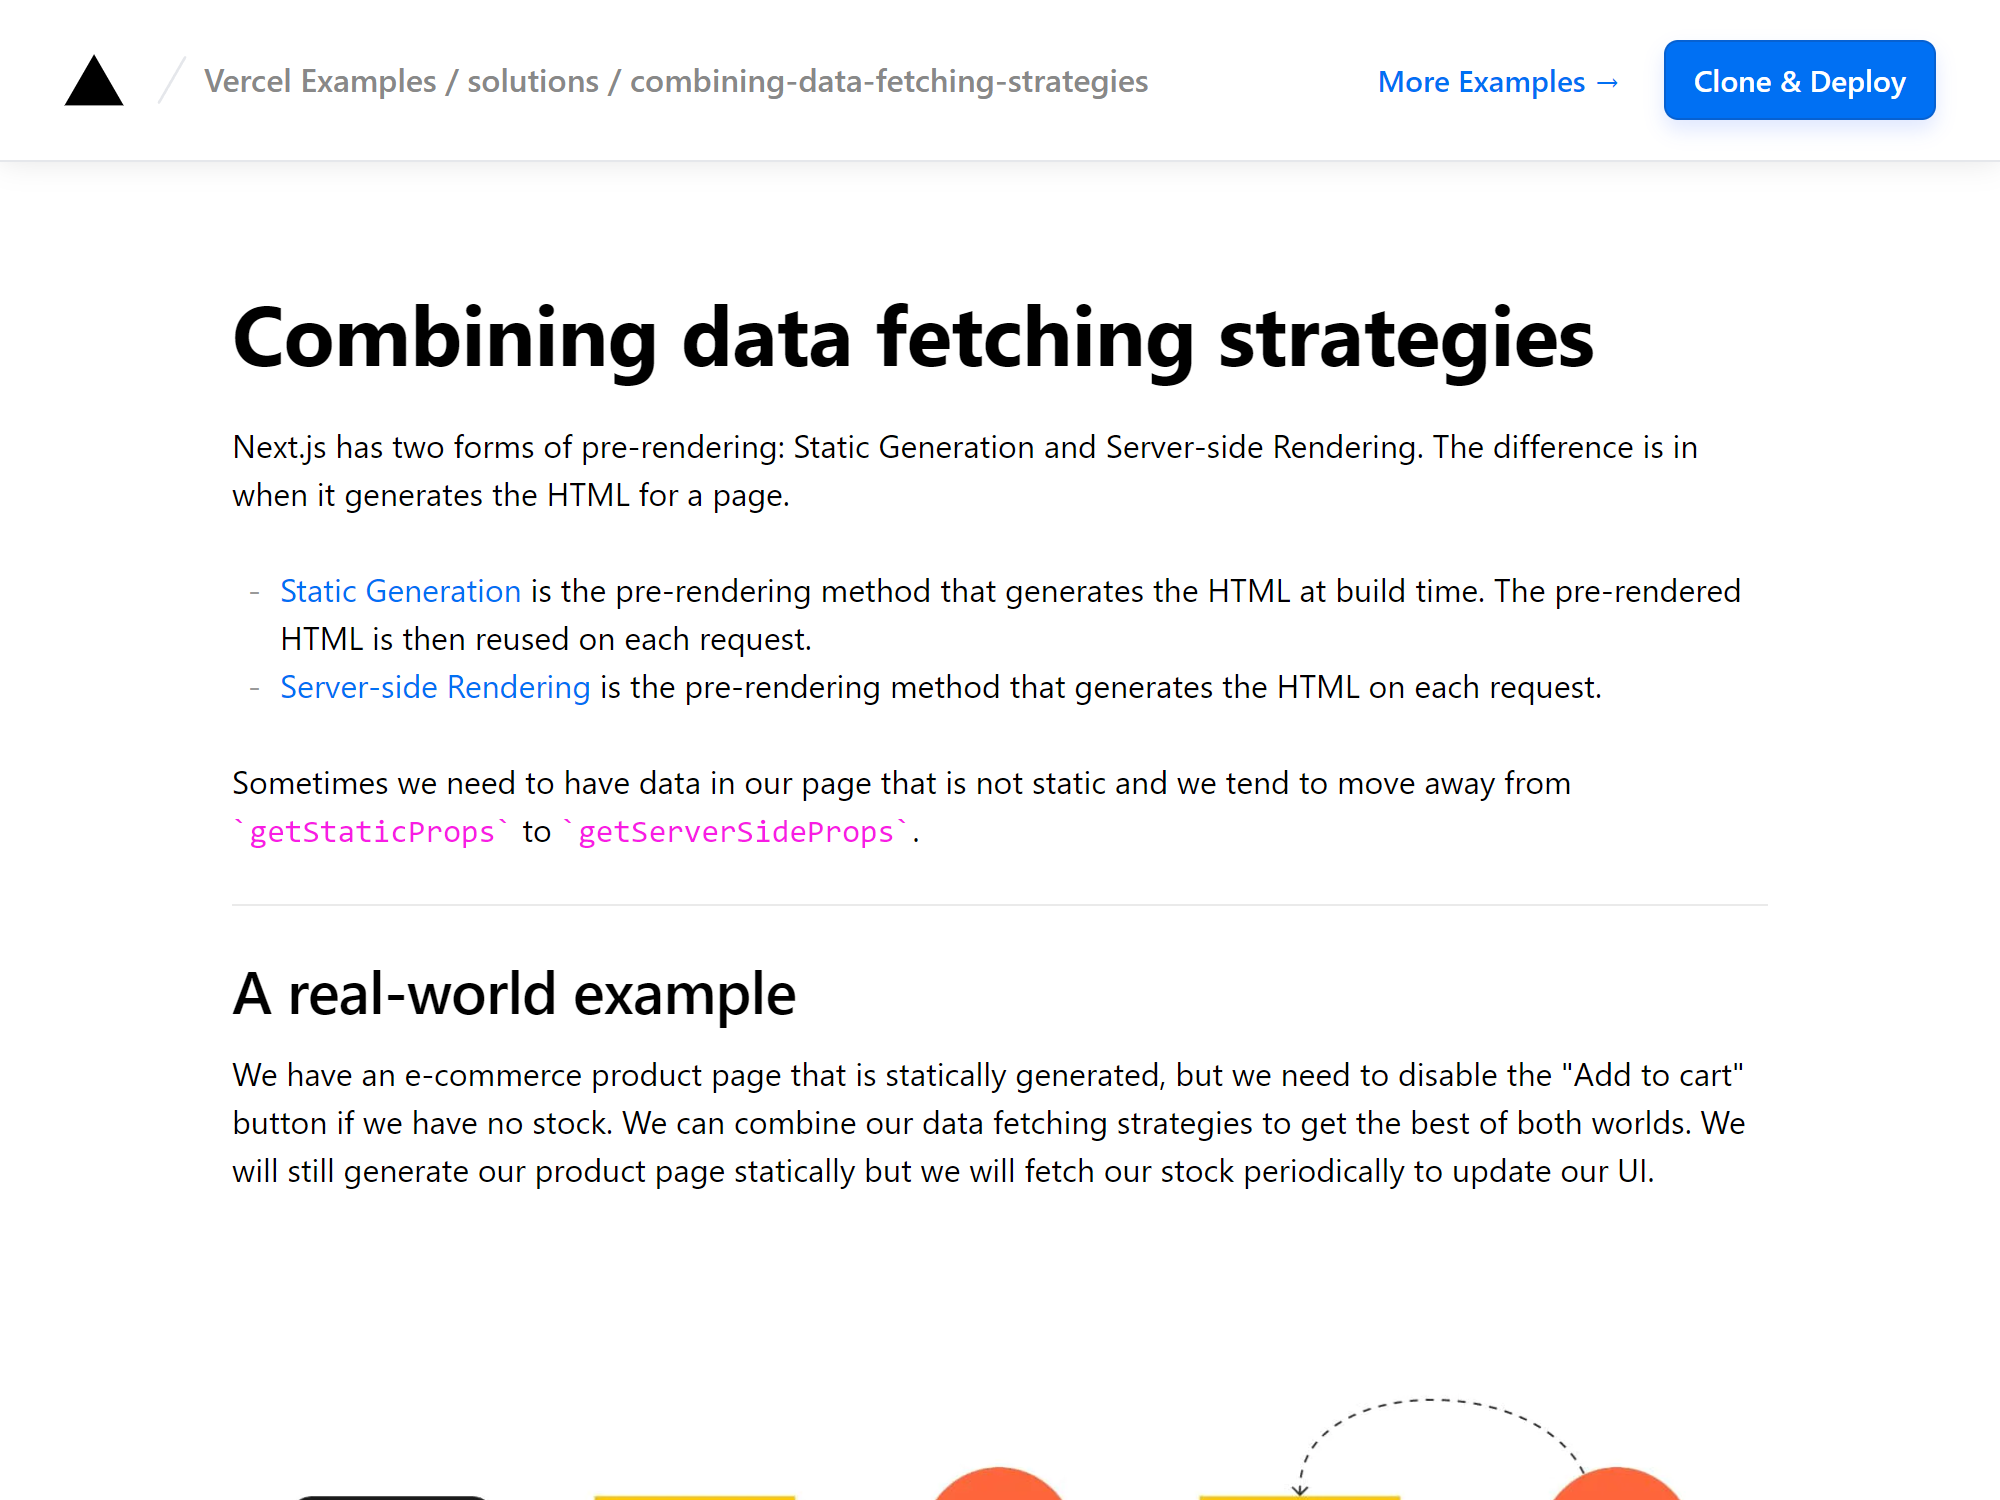 Combining data fetching strategies